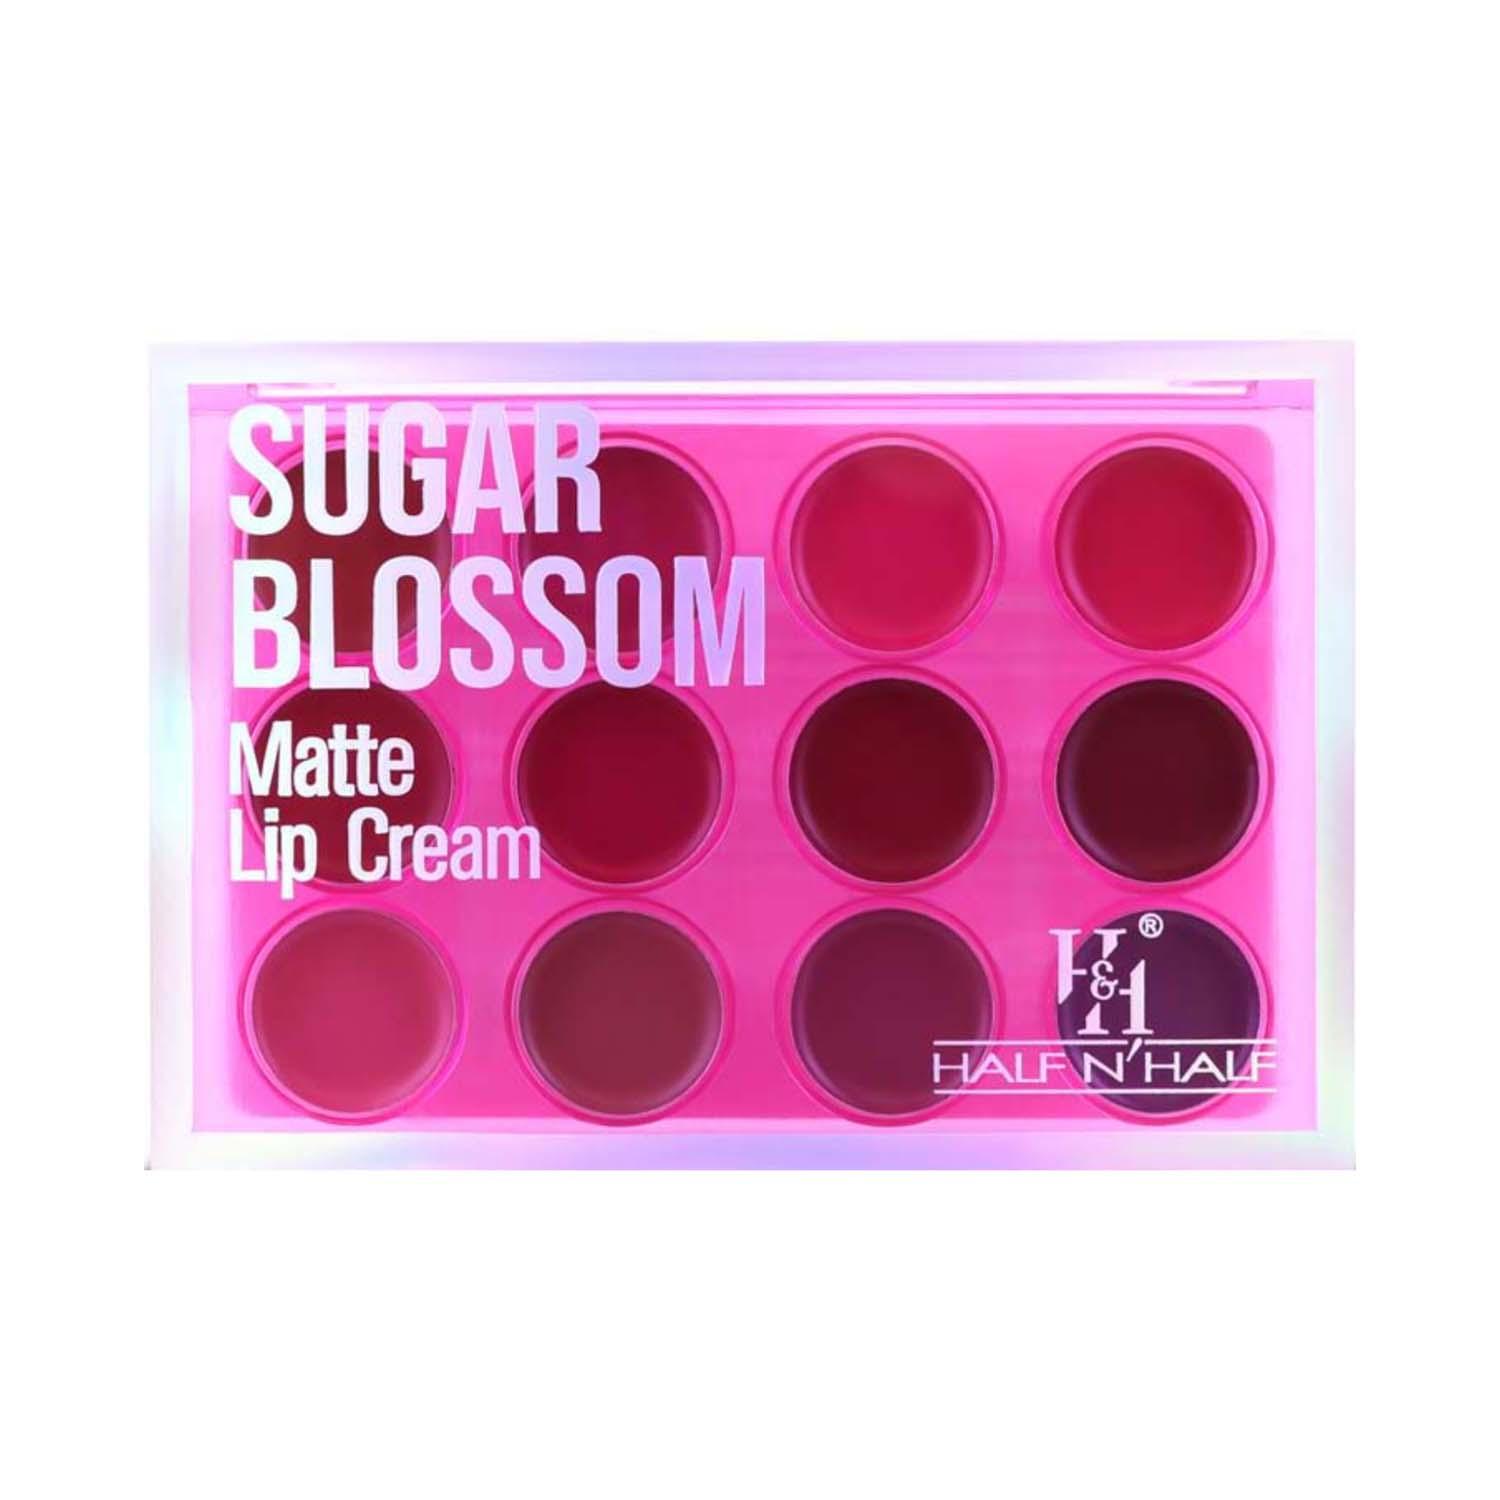 Half N Half | Half N Half Matte Lip Cream Palette - Sugar Blossom (12 g)